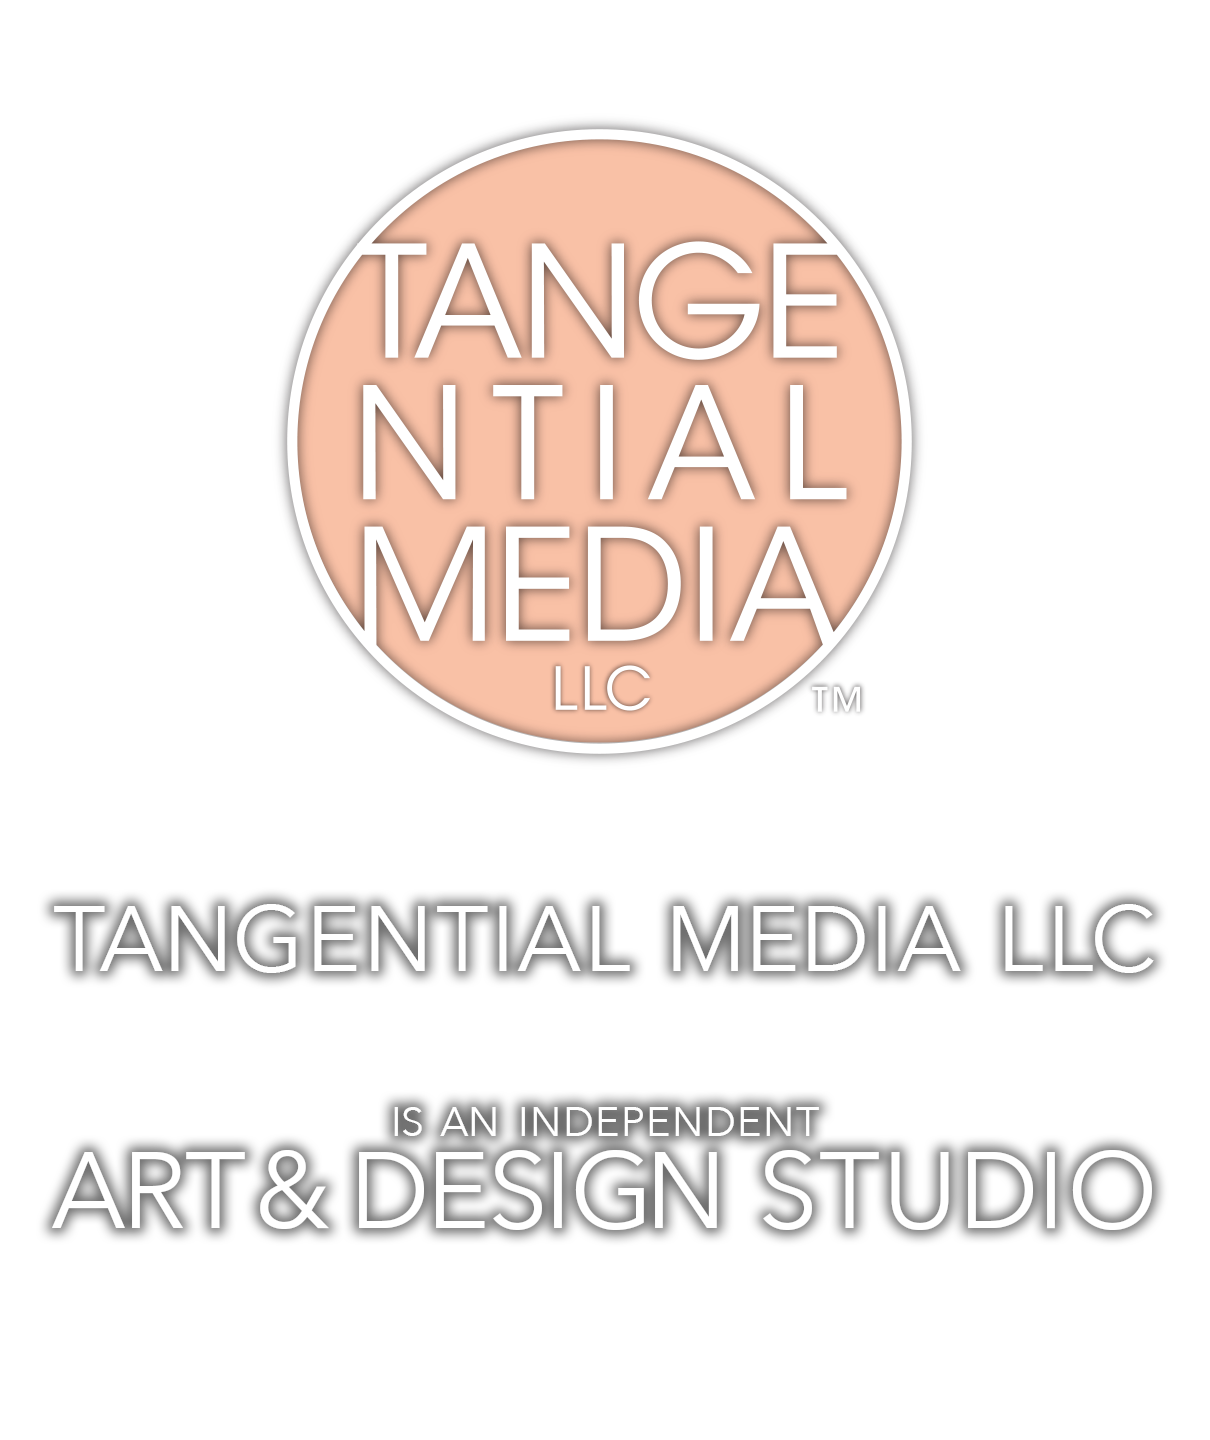 TANGENTIAL MEDIA LLC